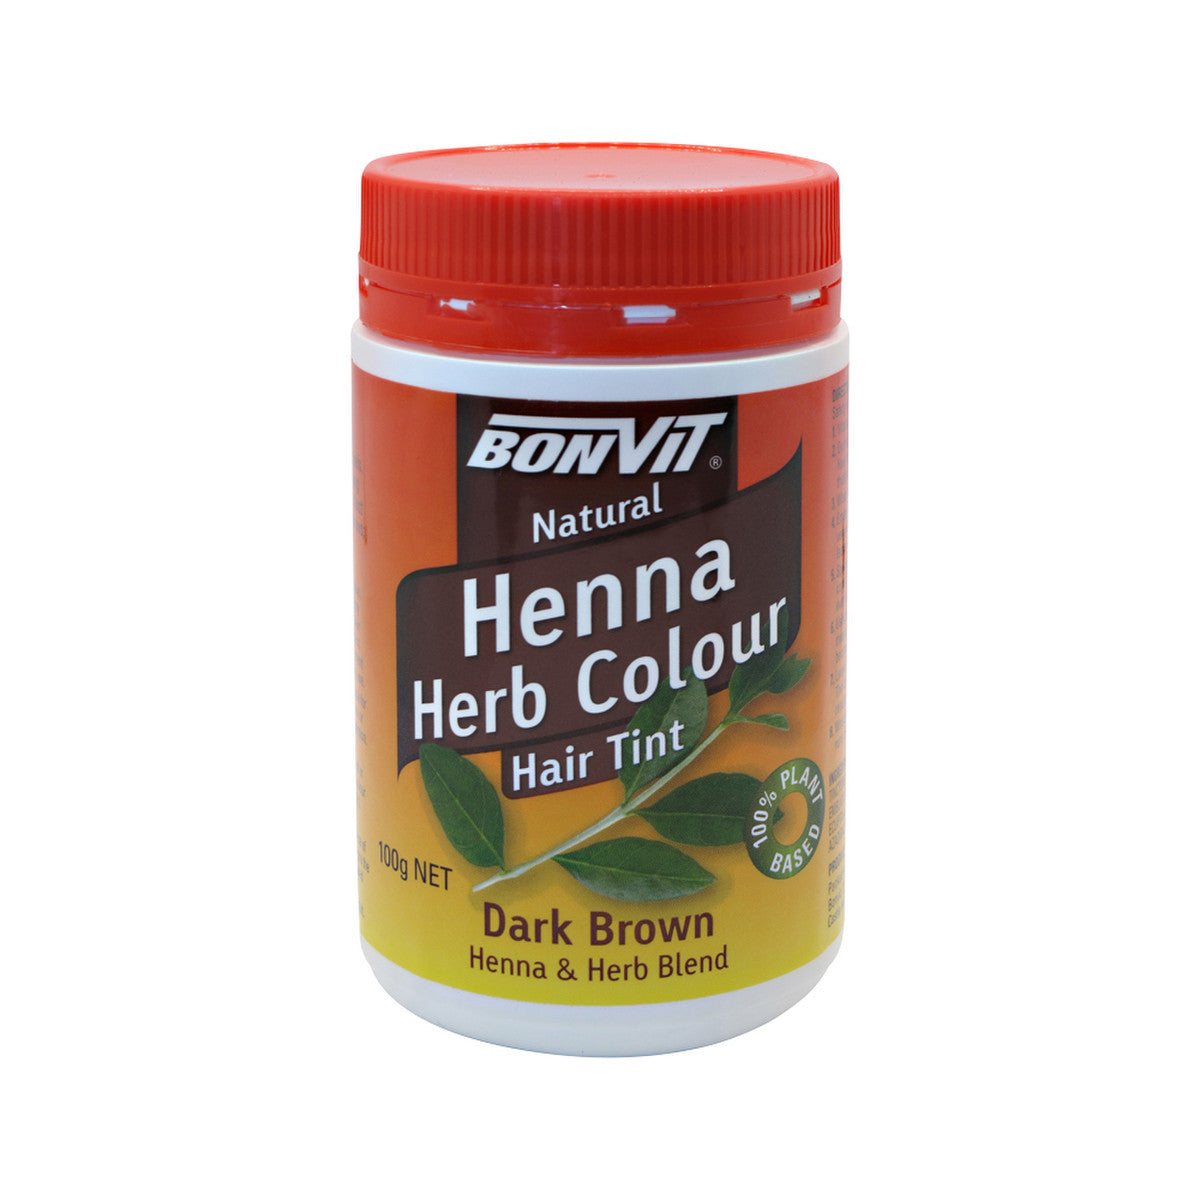 Bonvit - Henna Herb Colour Hair Tint Dark Brown